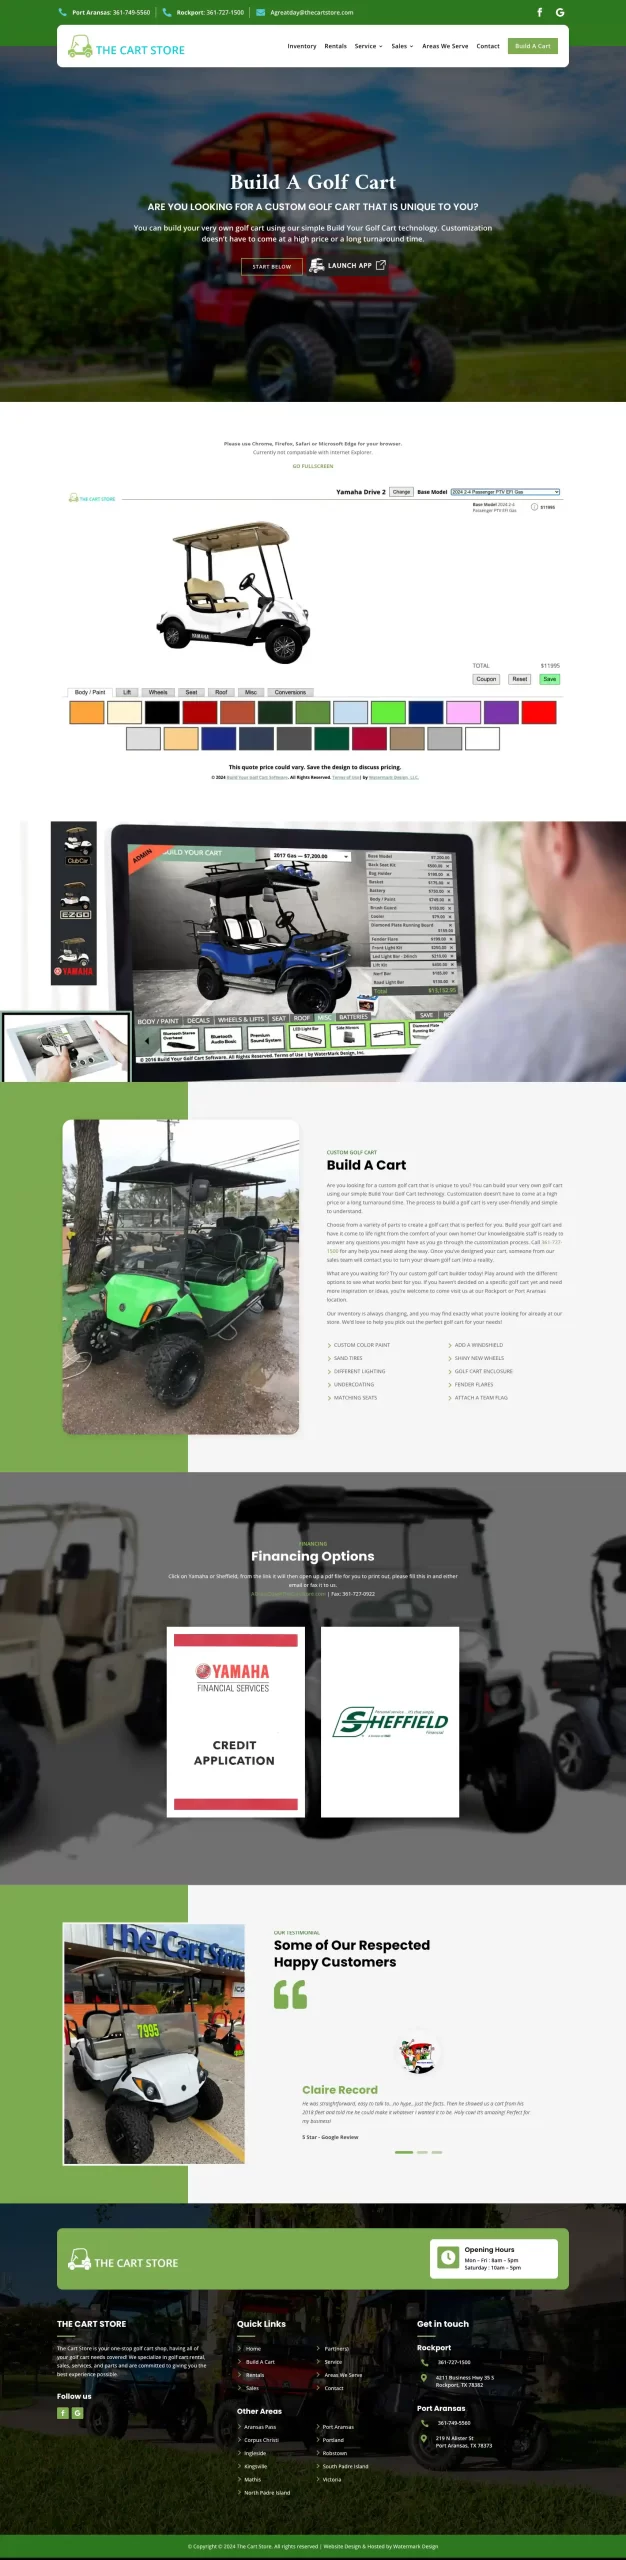 the cart store website design